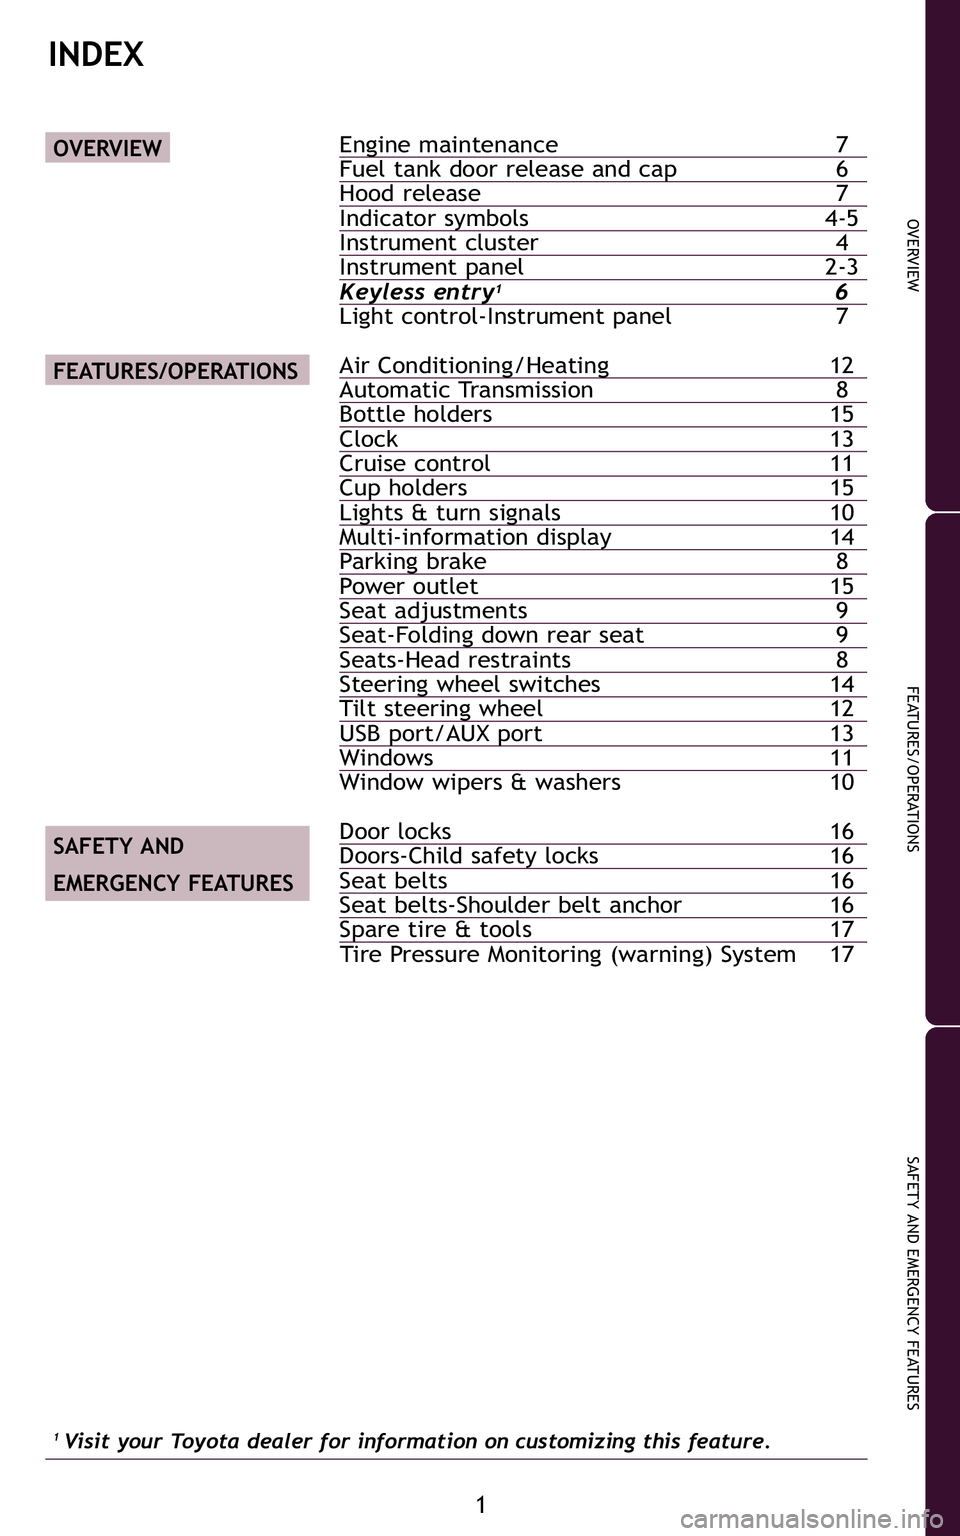 TOYOTA xD 2011  Owners Manual (in English) 1
OVERVIEW
FEATURES/OPERATIONS
SAFETYANDEMERGENCY FEATURES
Enginemaintenance 7Fueltank door release andcap 6Hoodrelease 7Indicatorsymbols 4�5Instrumentcluster 4Instrumentpanel \f�3Keylessentry16
Light